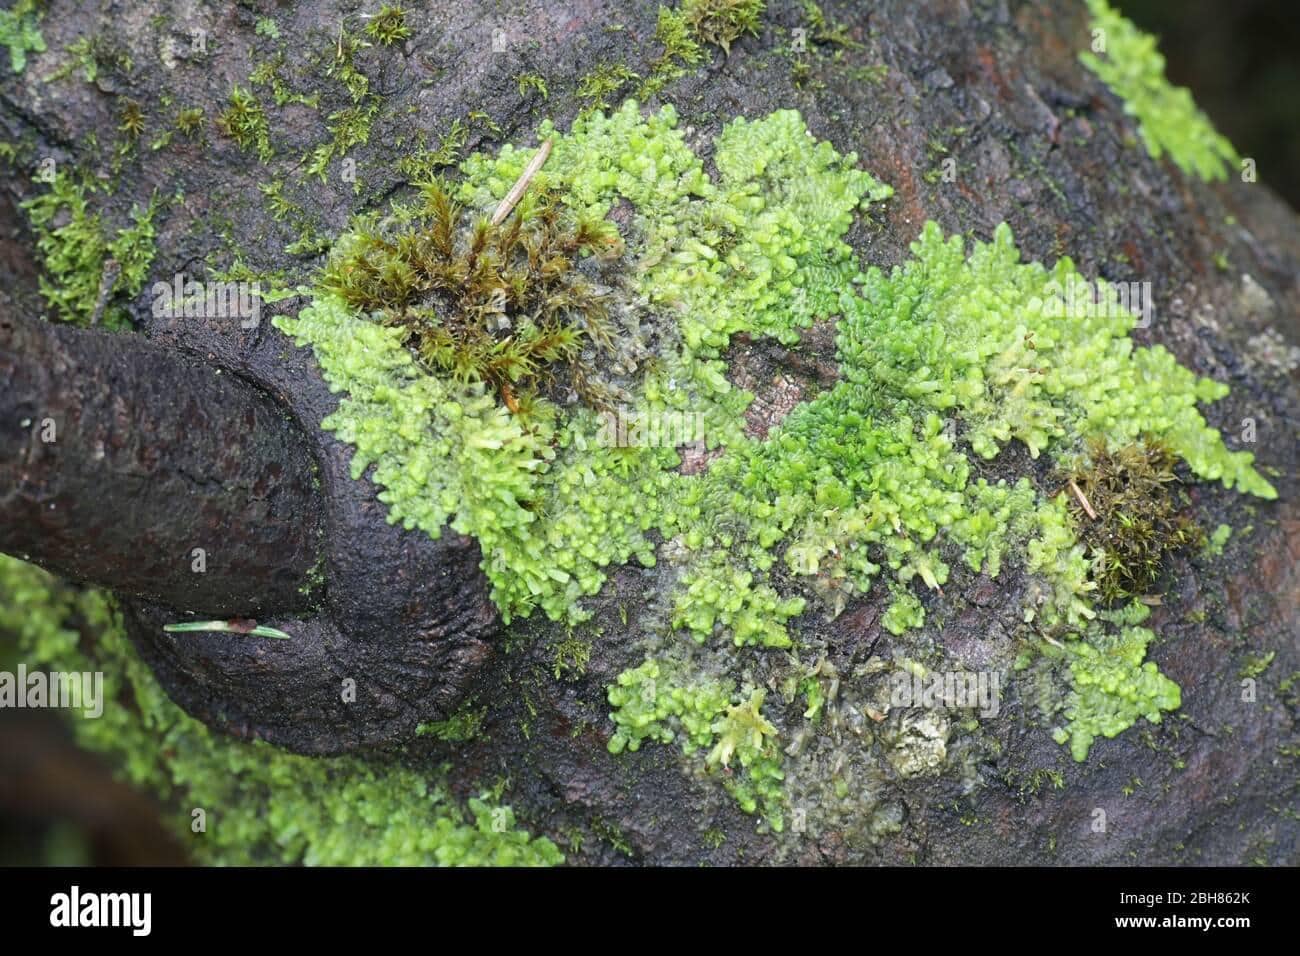 even-scalewort-moss-radula-complanata-a-cannabinoid-moss-from-finland-2BH862K.jpg